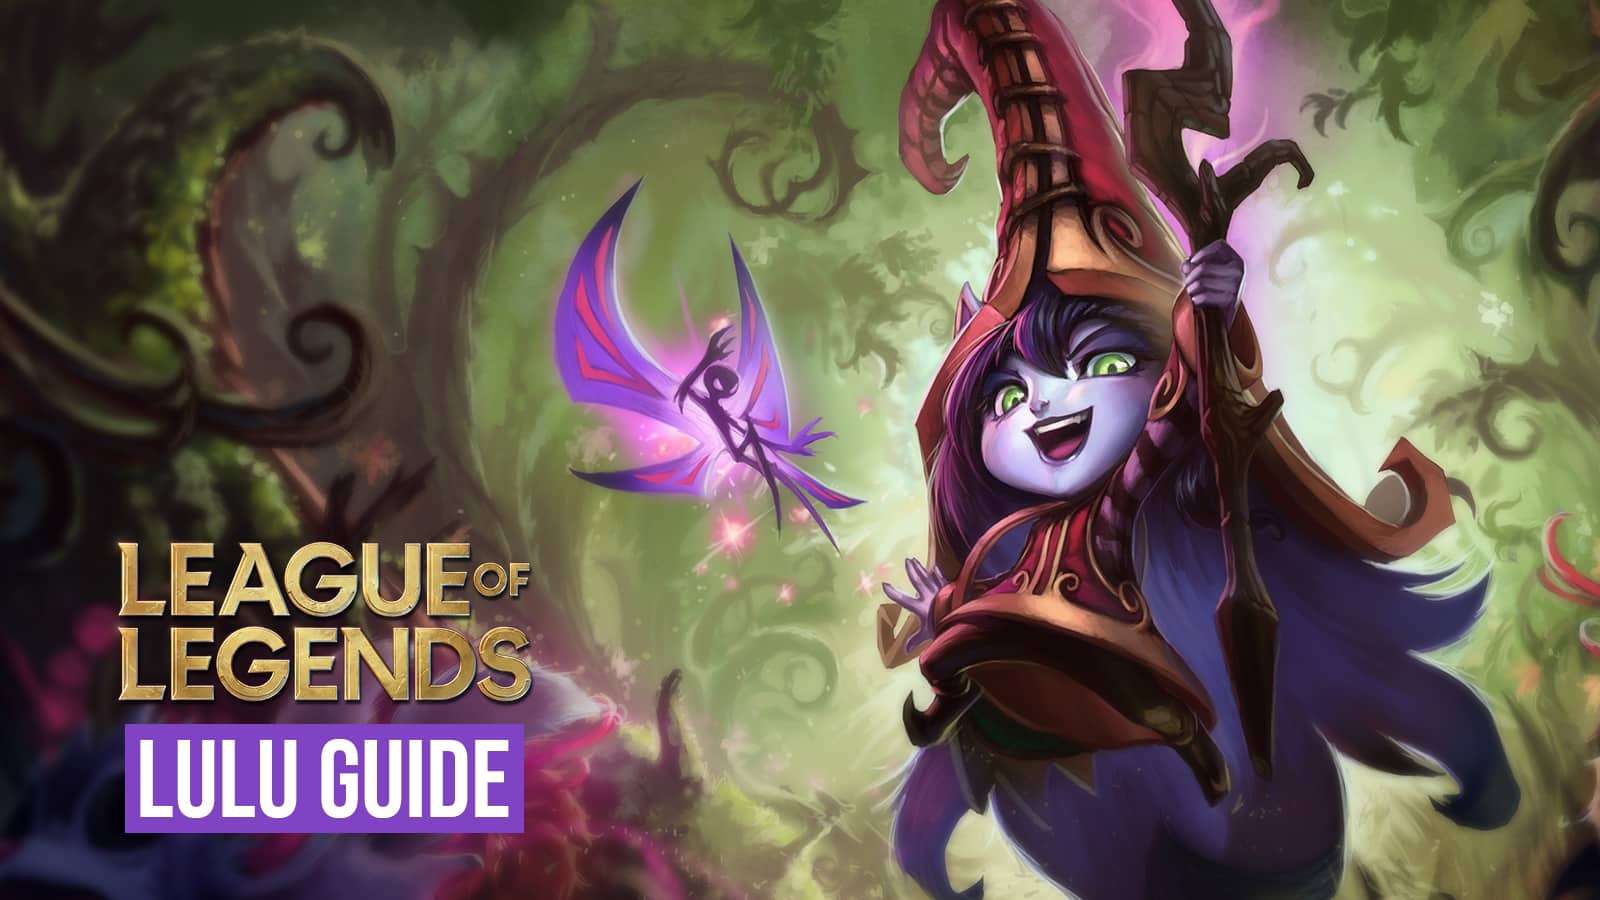 Lulu guide league of legends season 11 best runes builds tips tricks skins